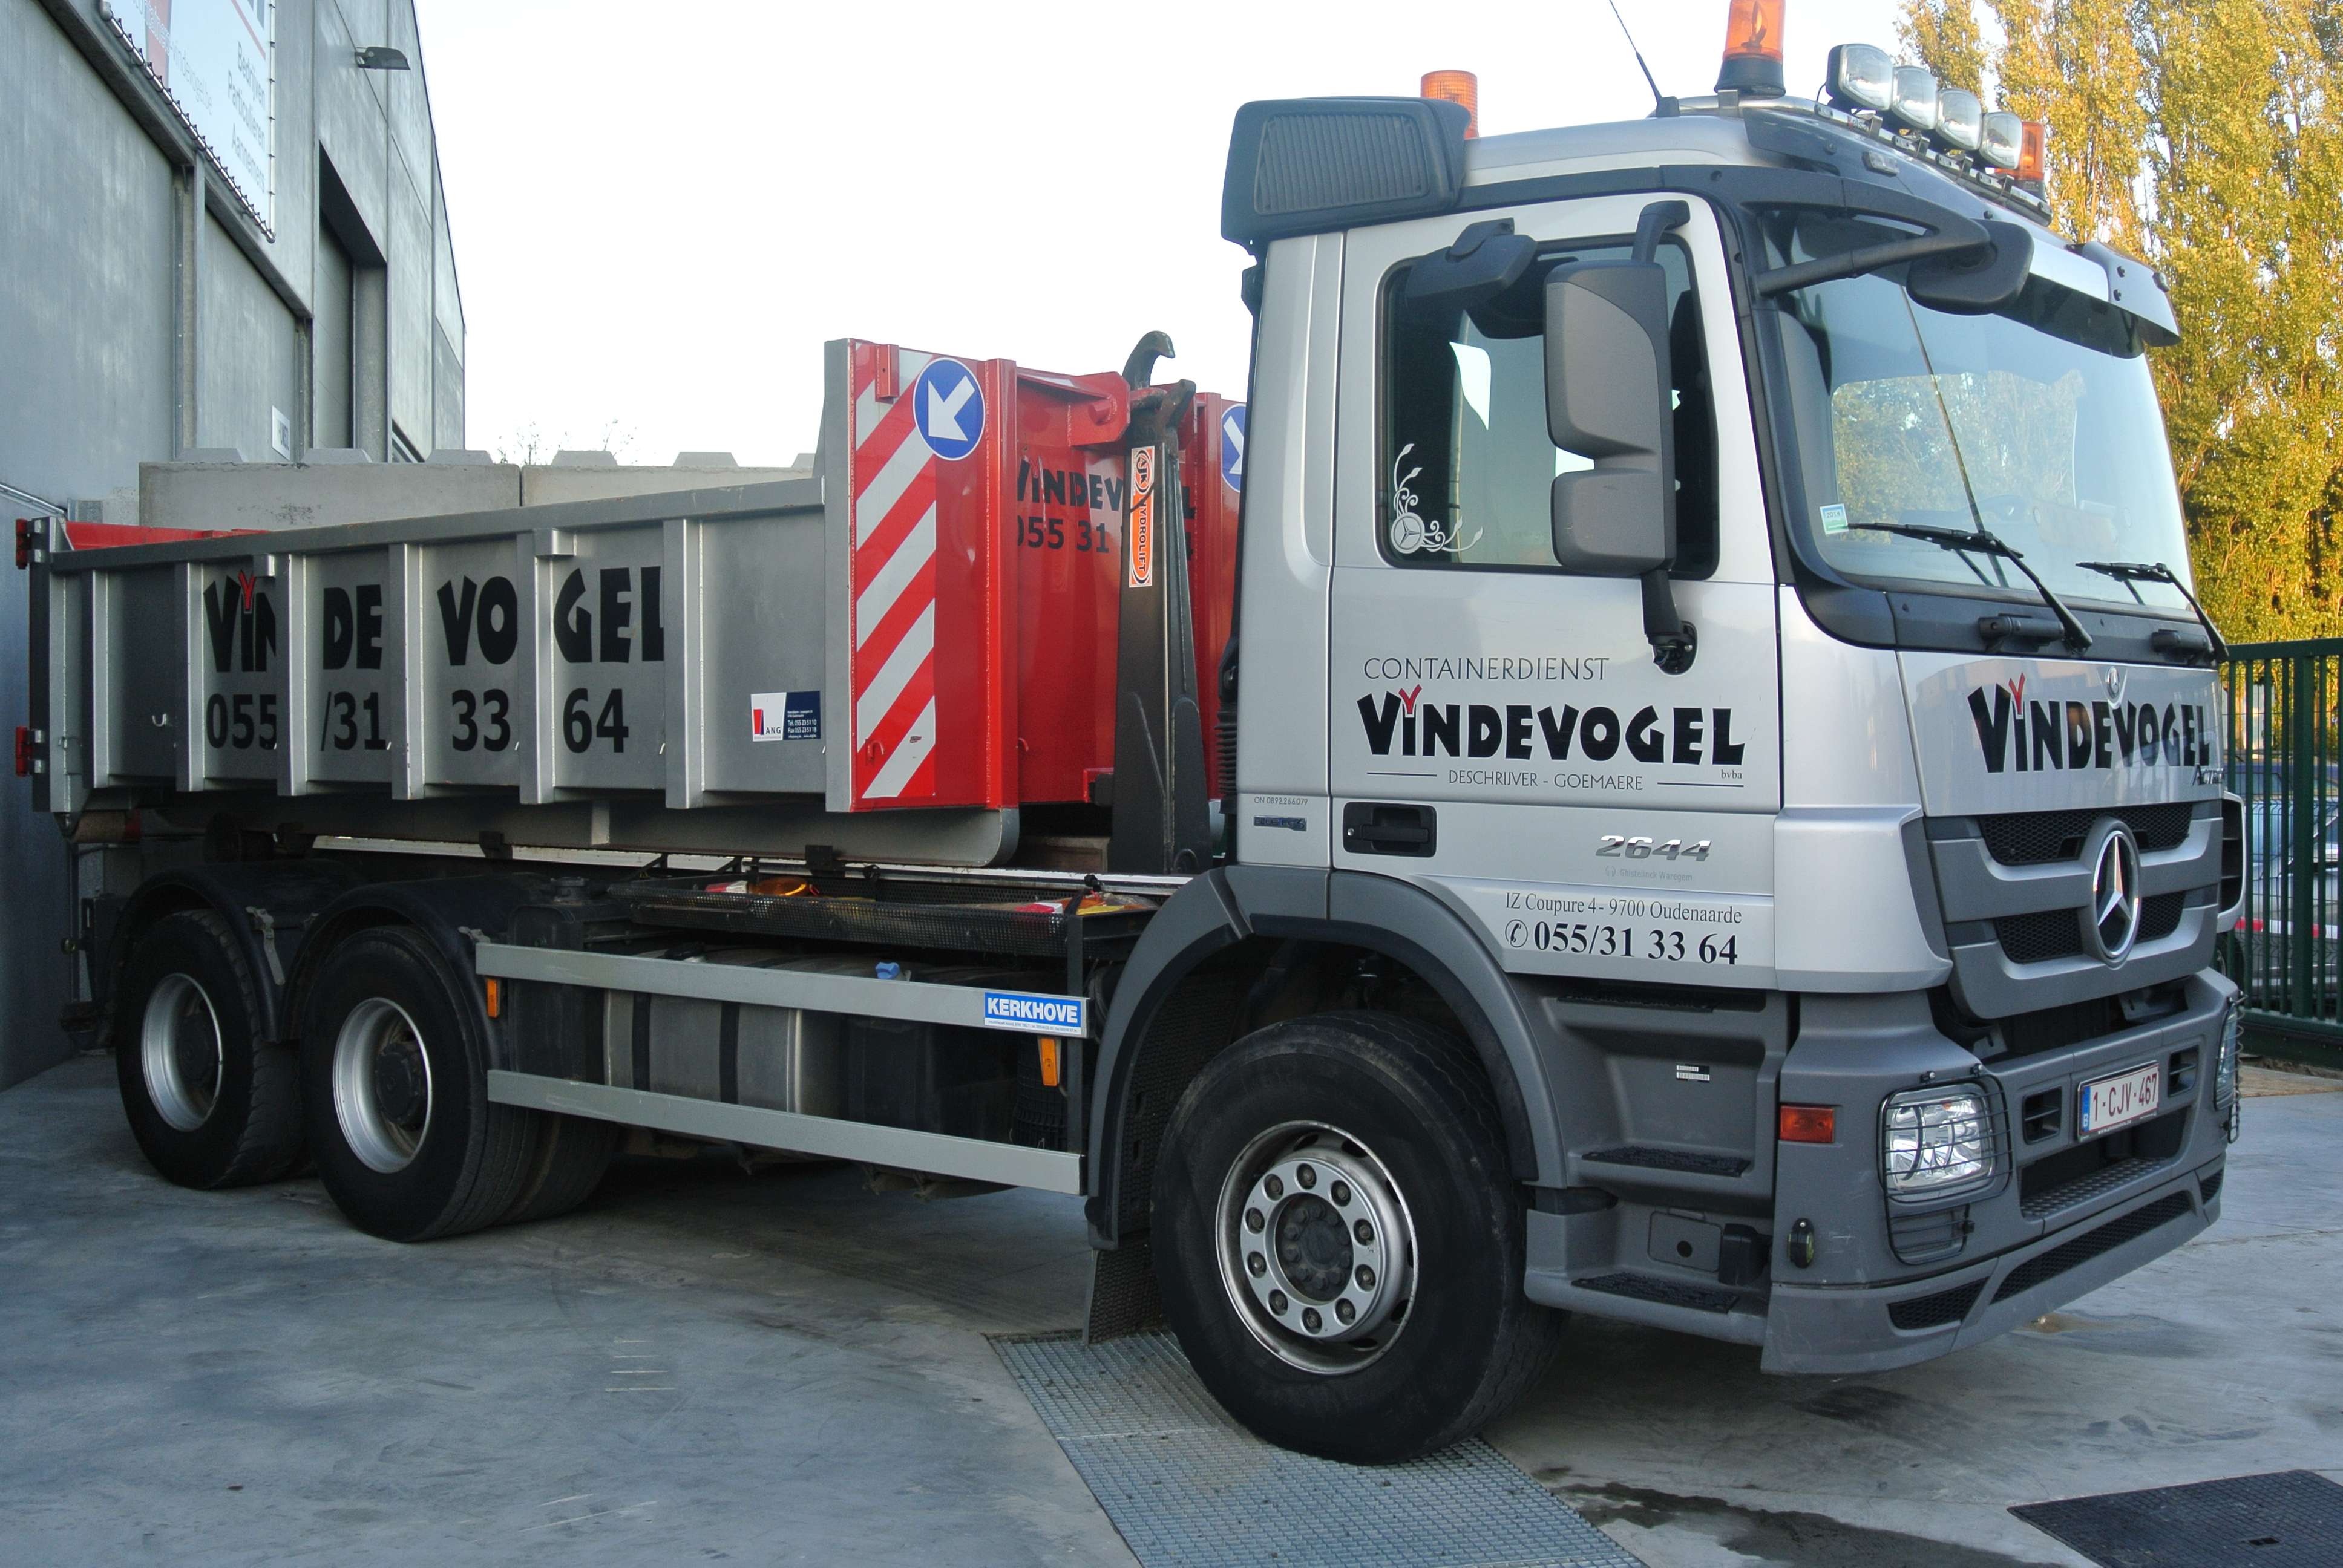 afvalcontainerverhuurders Ronse/Renaix Containerdienst Vindevogel BV